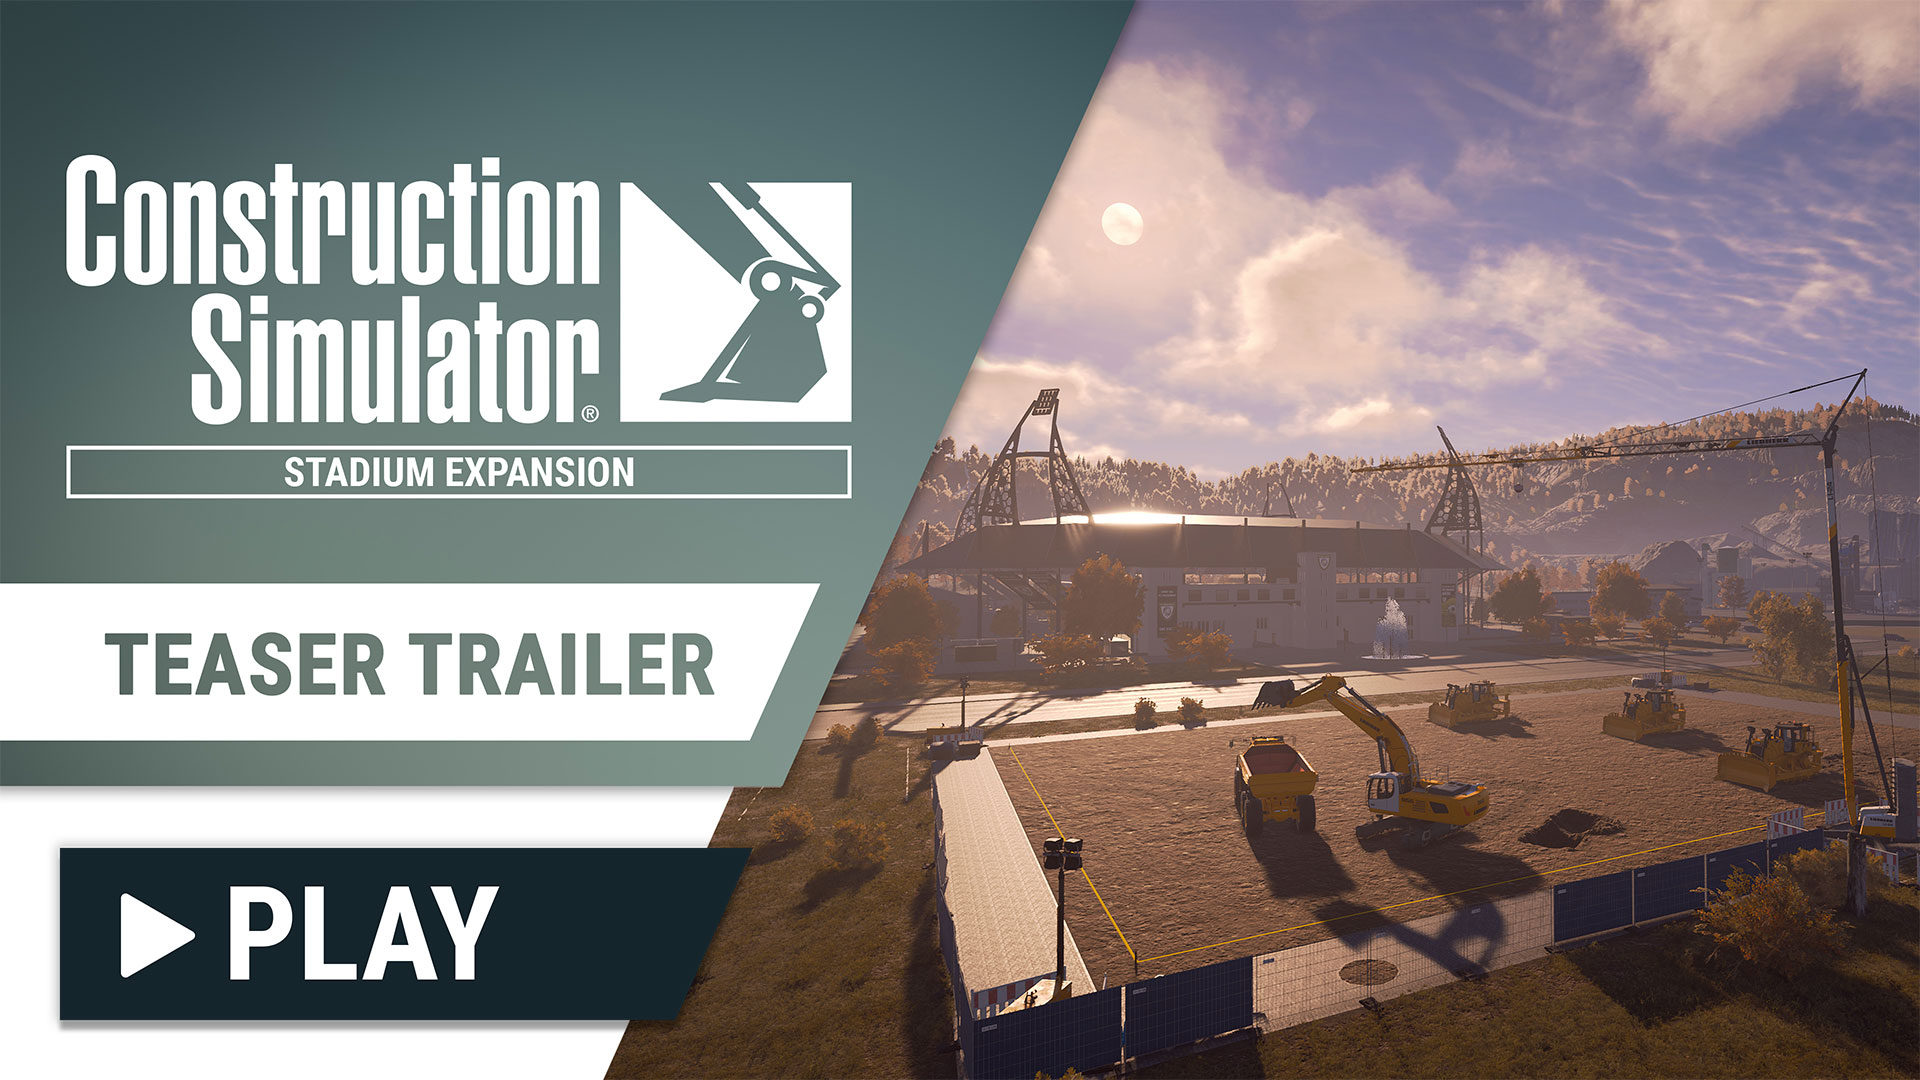 Construction Simulator - Stadium Expansion